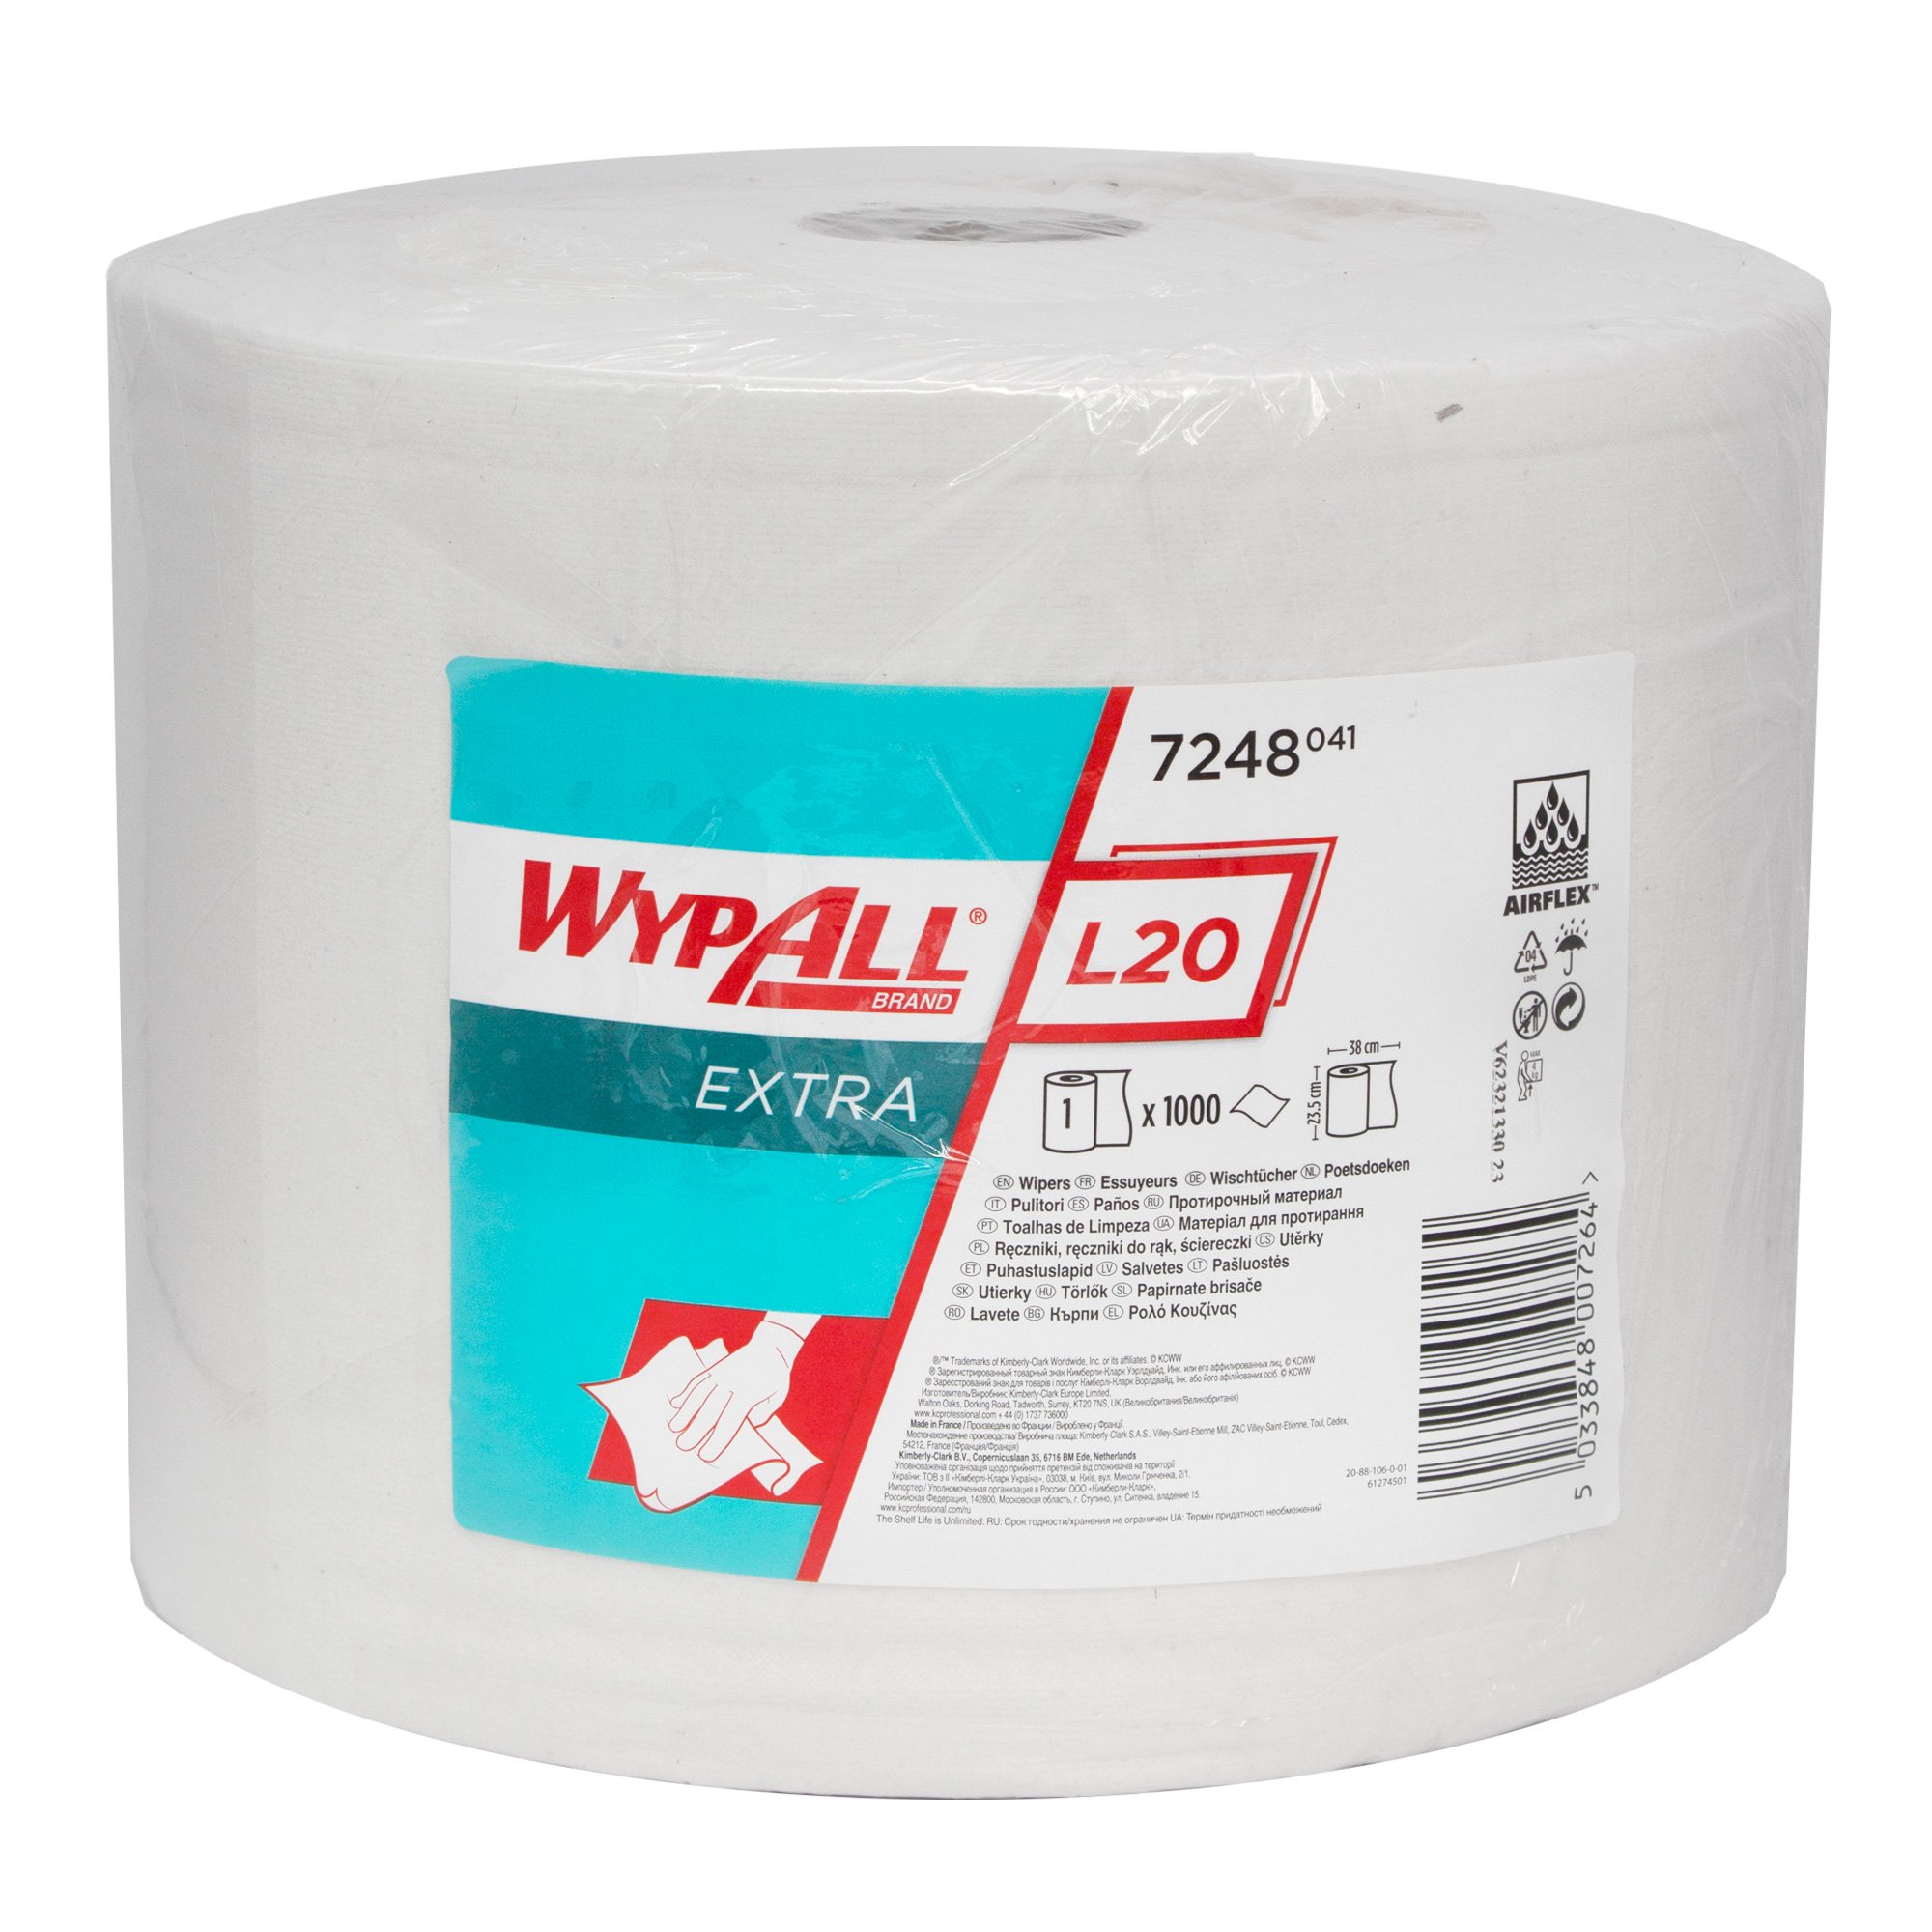 Wypall 7248 EXTRA Wischtücher Großrolle L 20 weiß 2-lagig, 23,5 cm breit, 1000 Tücher 